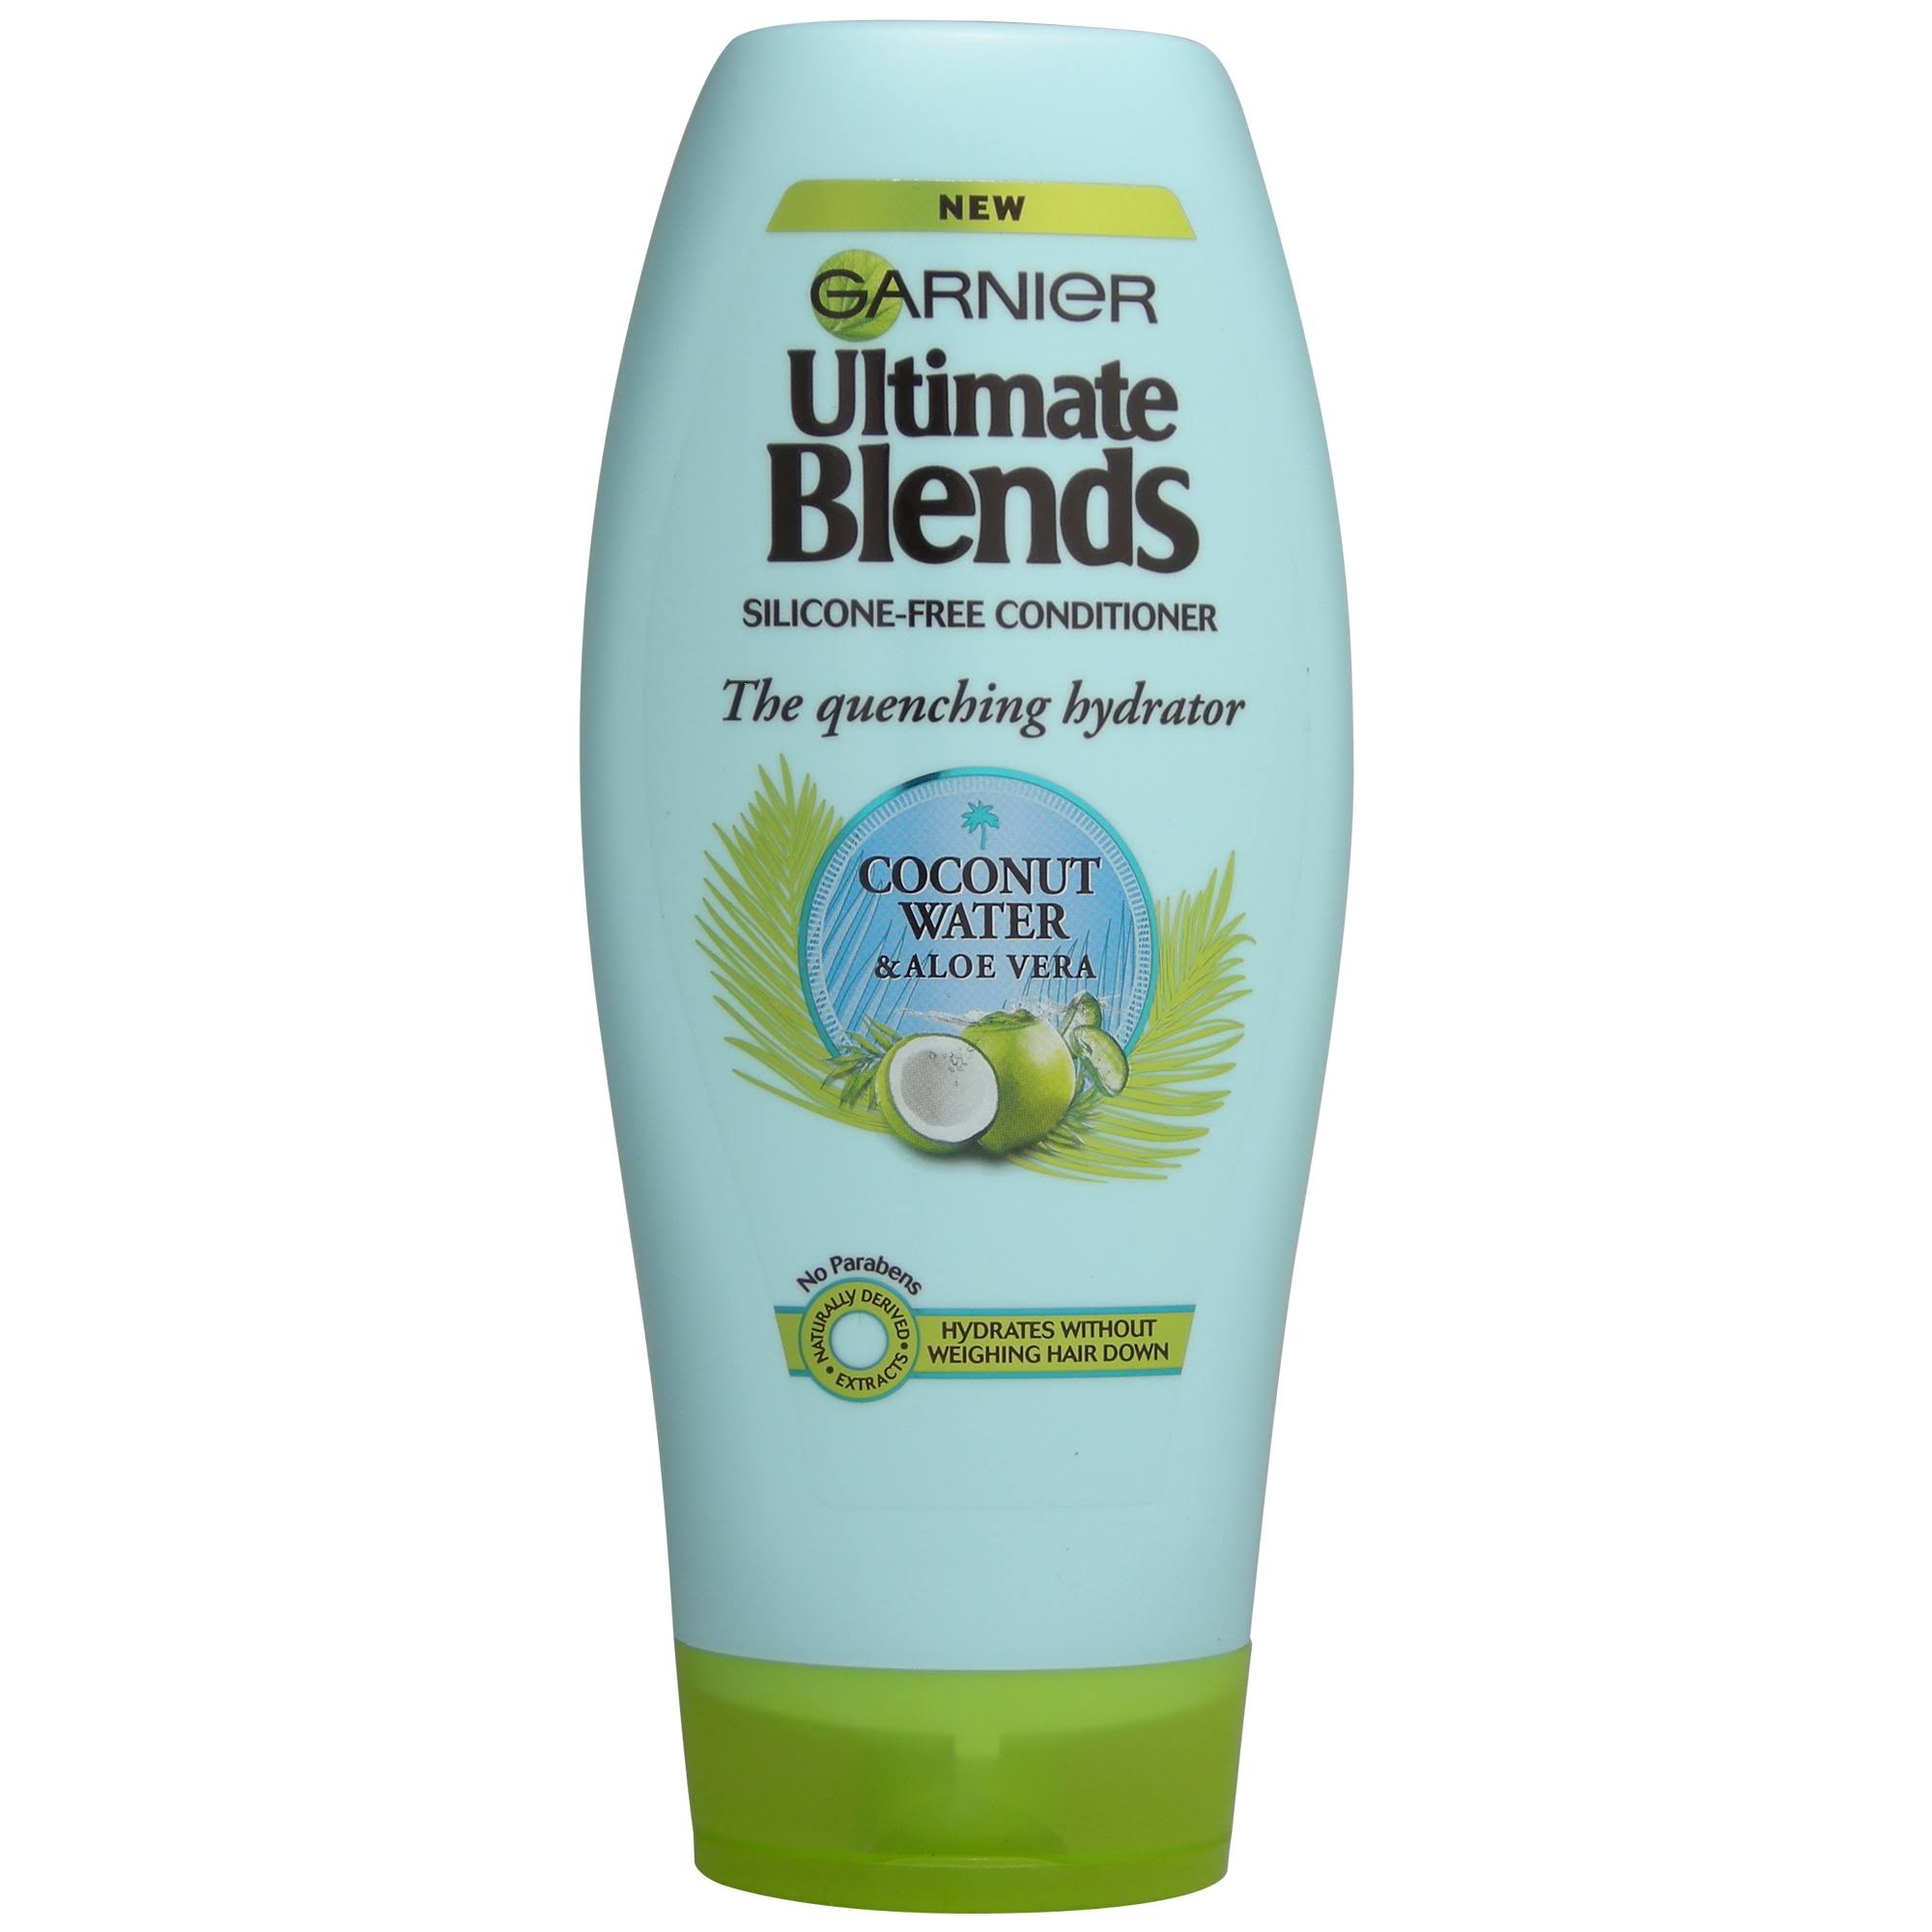 Garnier Ultimate Blends Dry Hair Conditioner - Coconut Water & Aloe Vera, 360ml